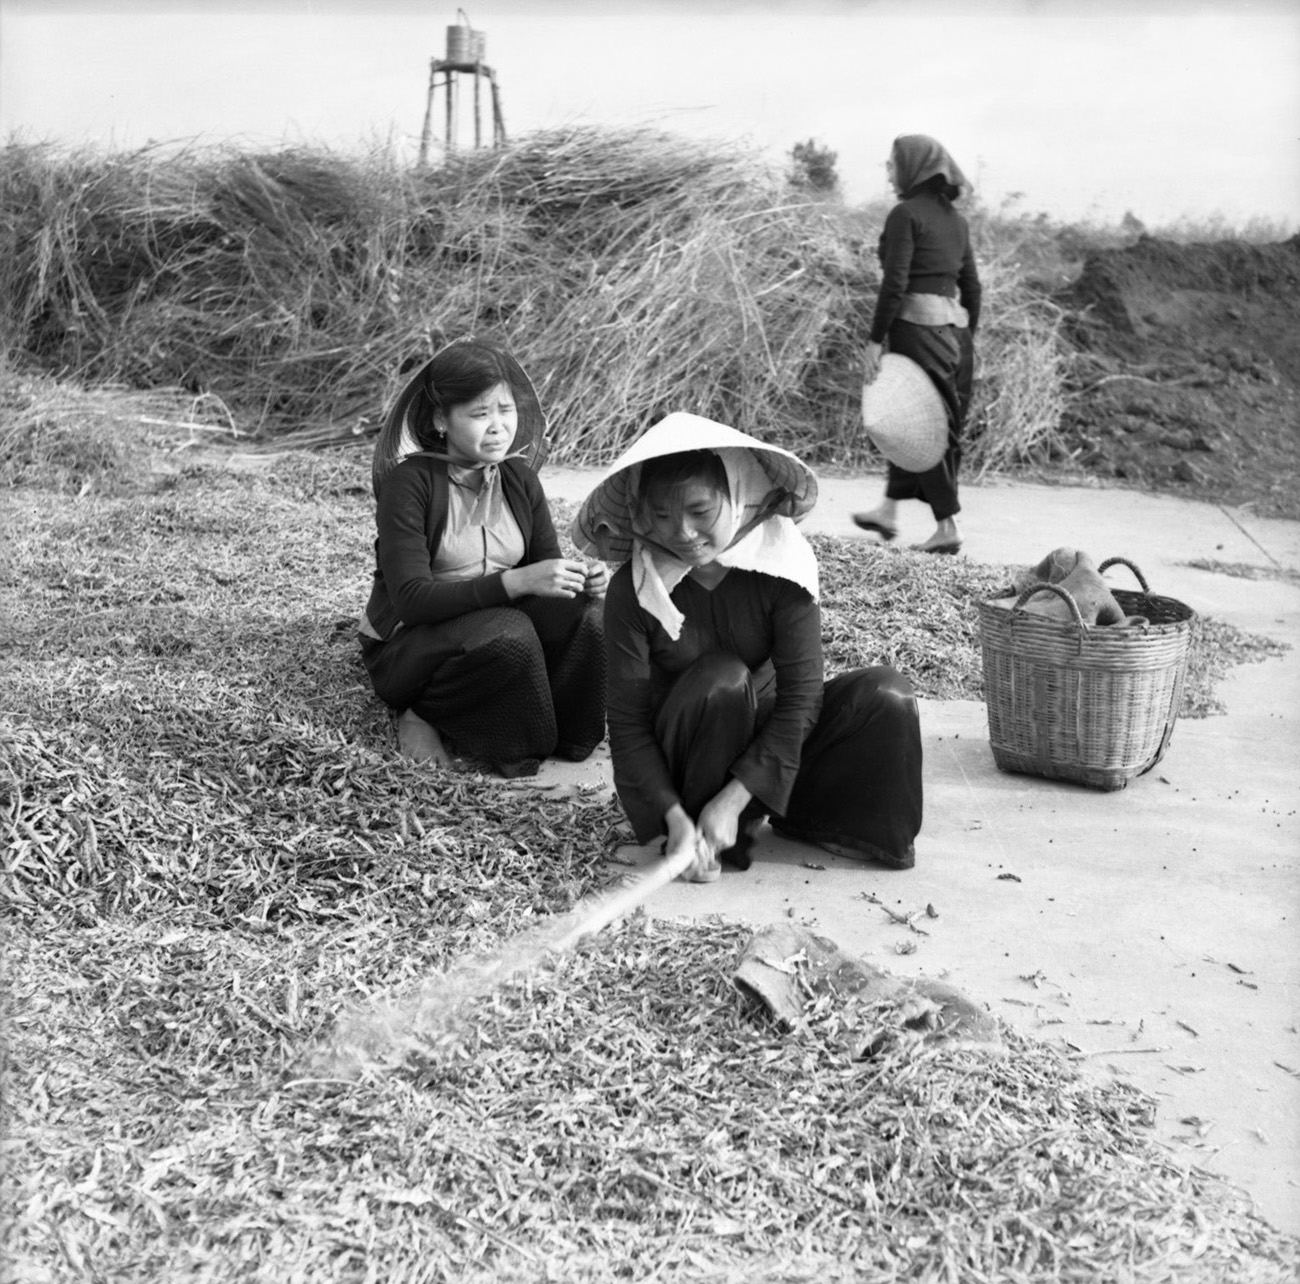 Vietnamese women threshing, approximately 1962-1963